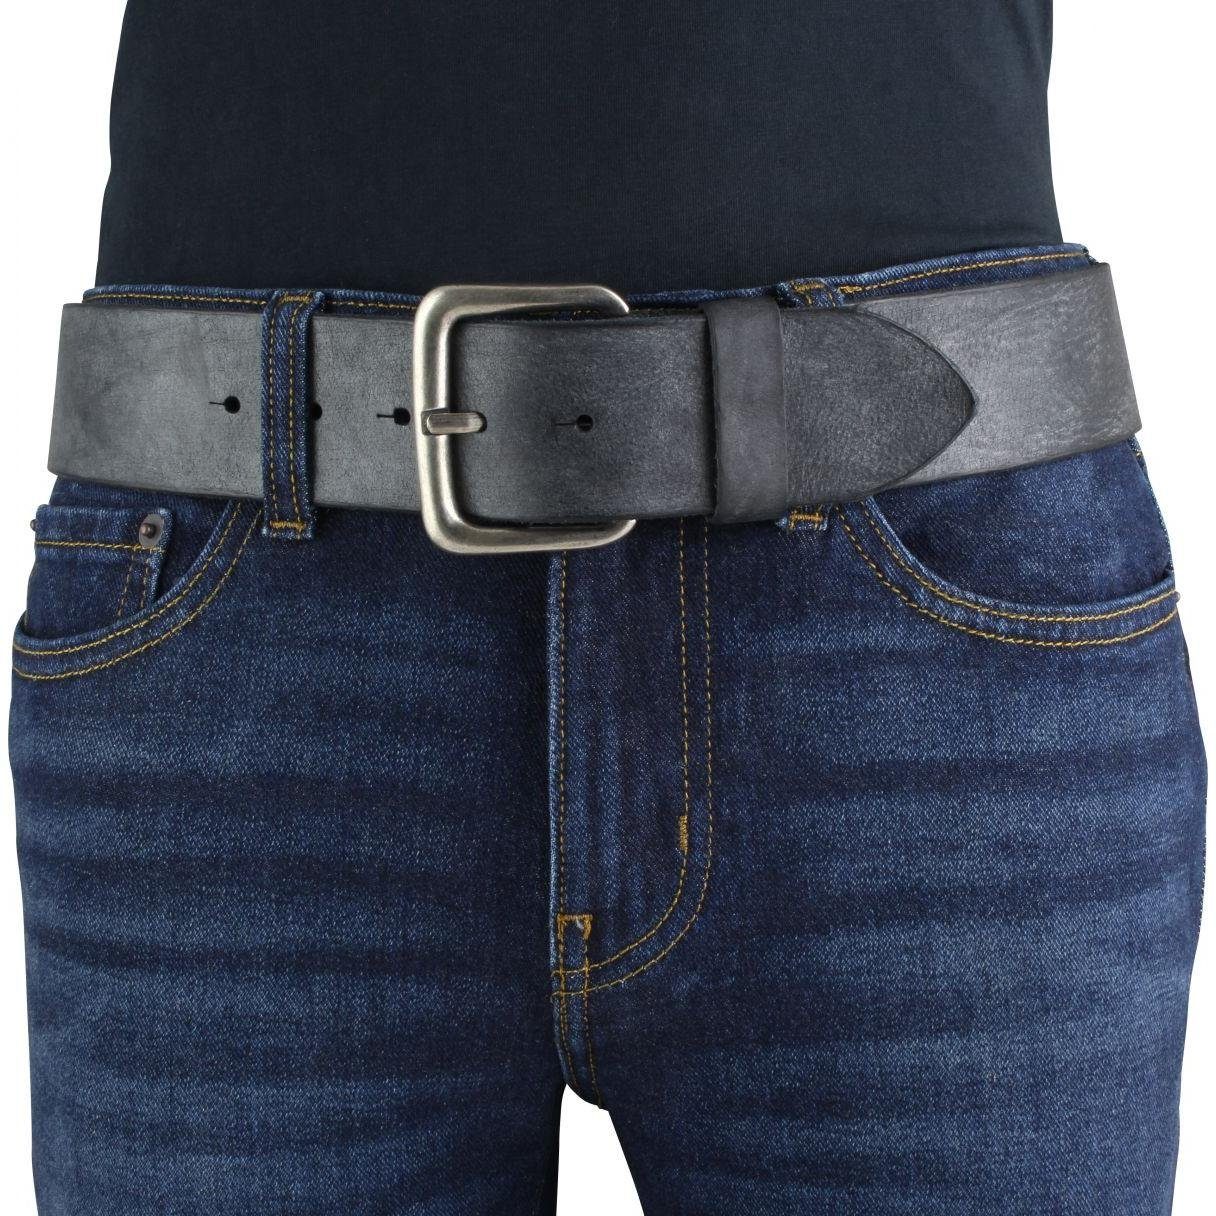 BELTINGER Ledergürtel Gürtel aus Vollrindleder - cm mas Used-Look 5 Jeans-Gürtel mit Braun, Altsilber weichem